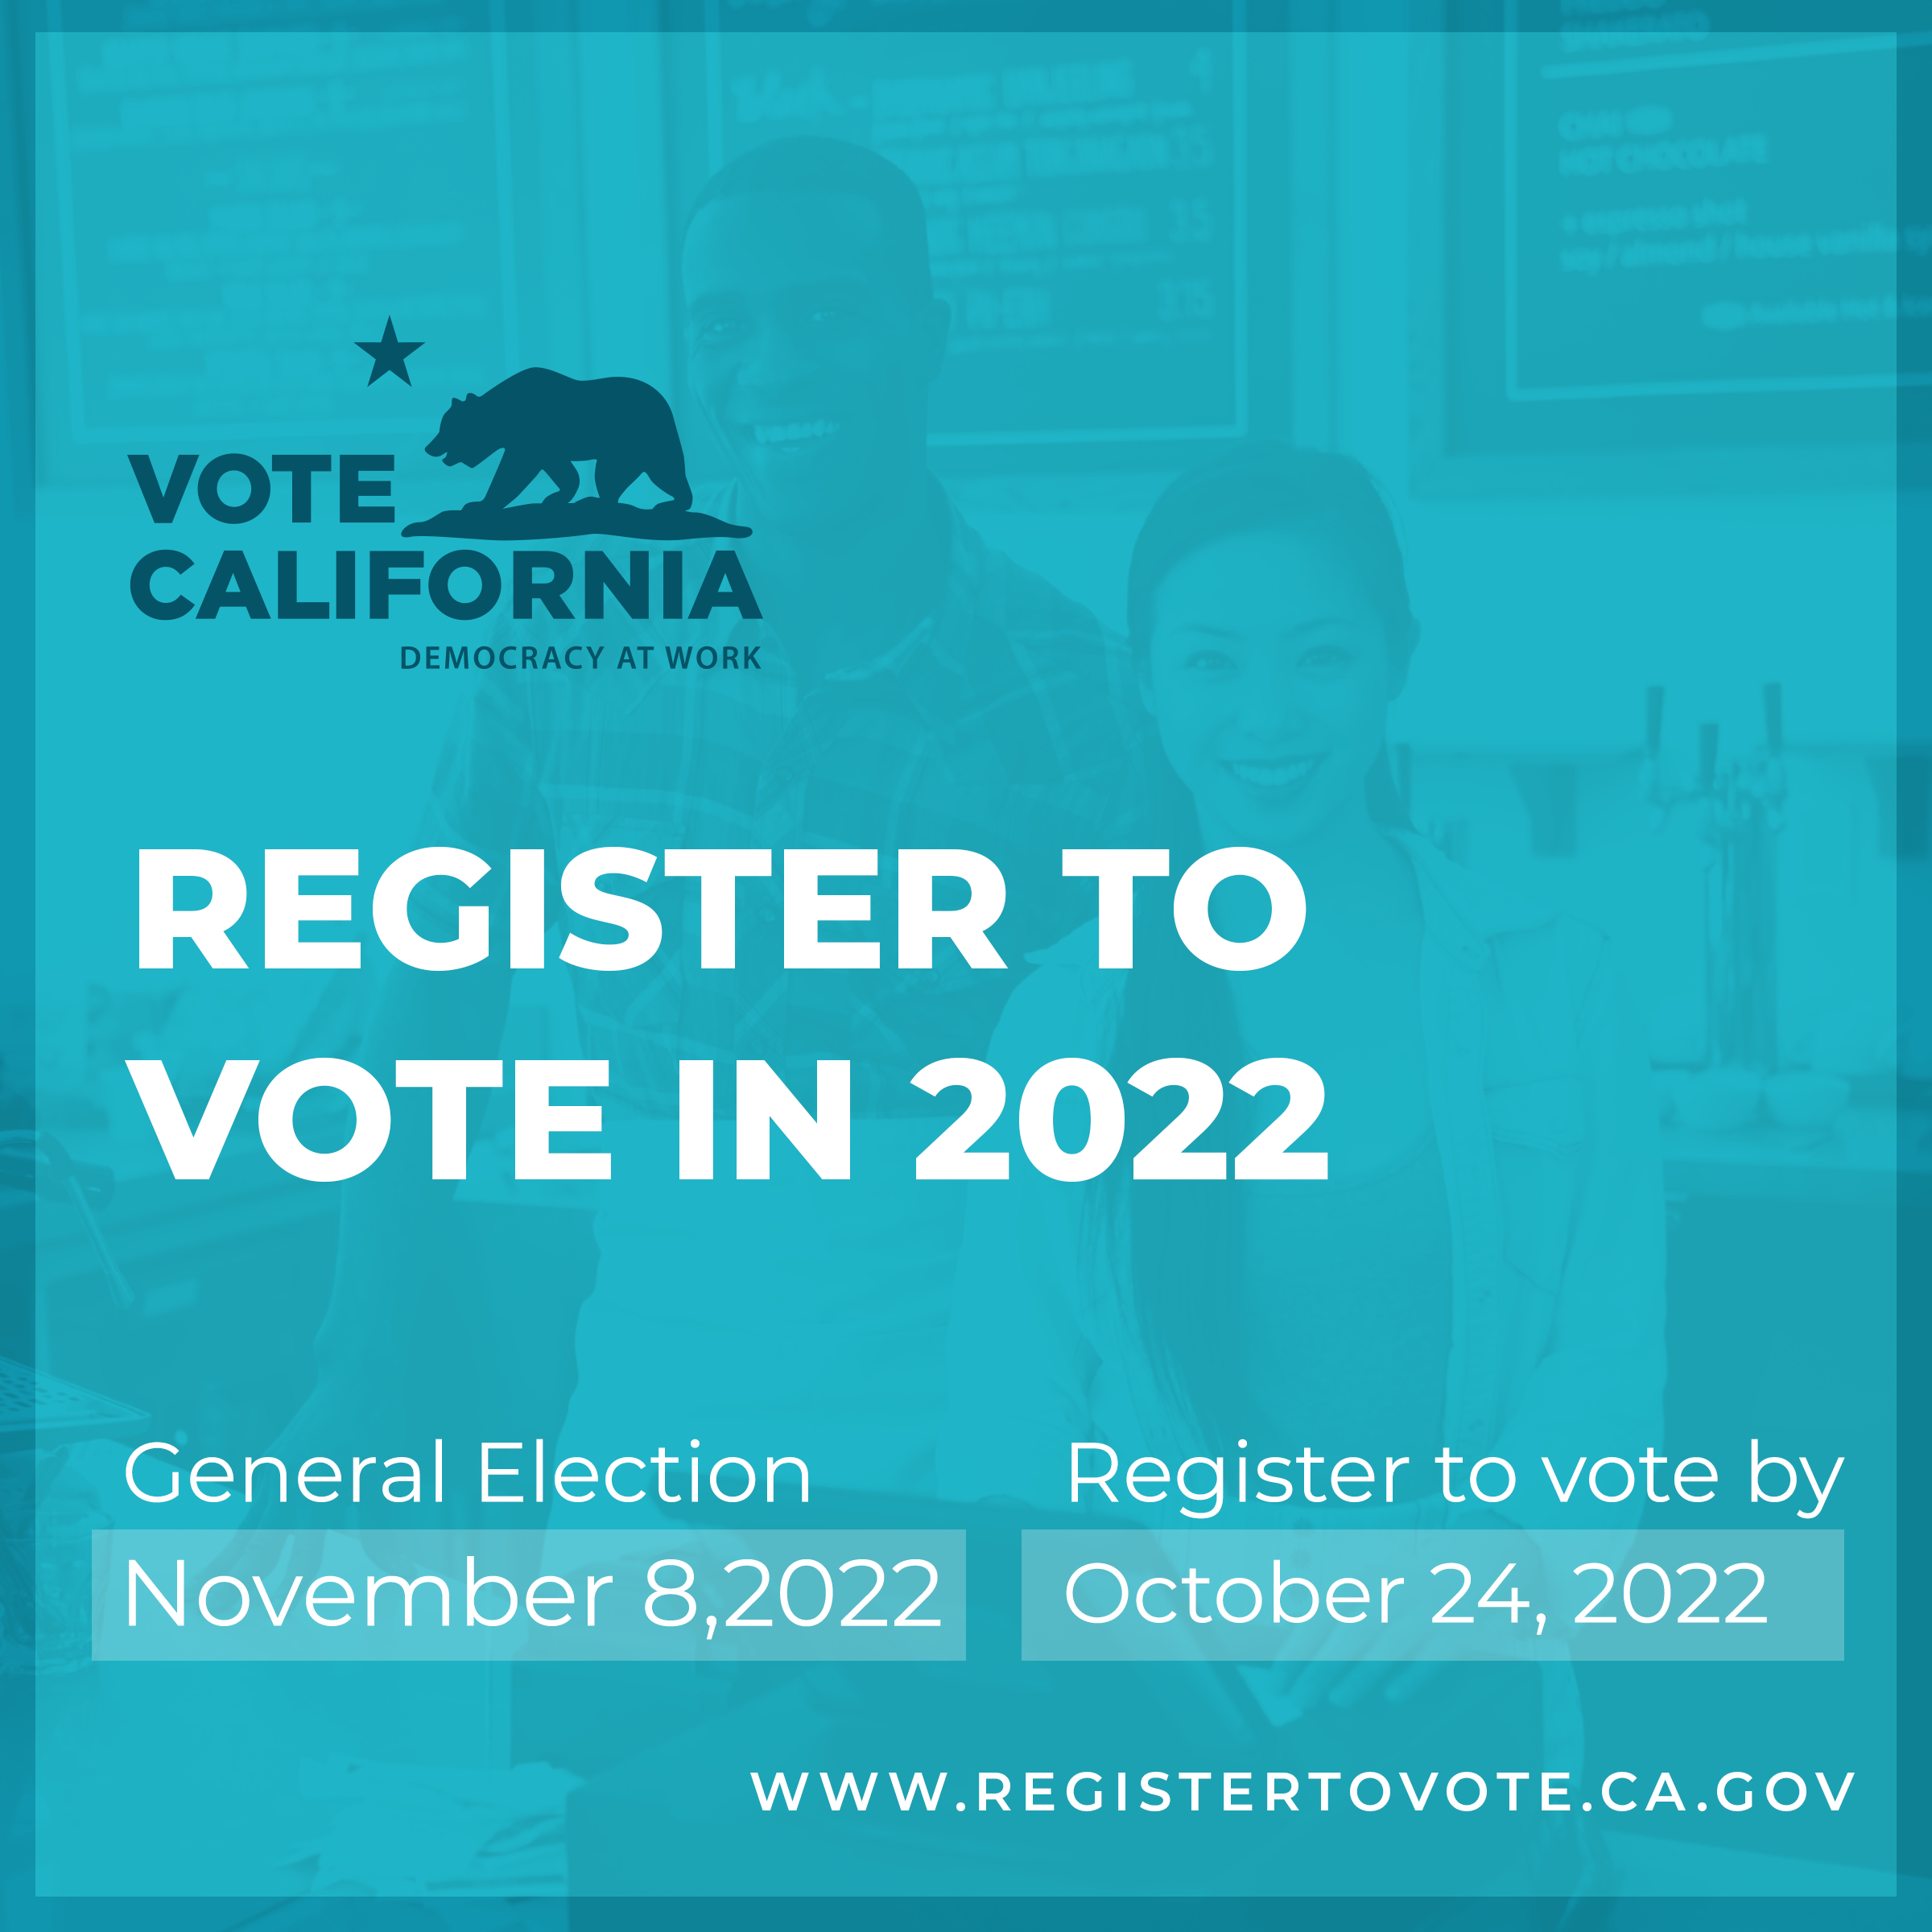 Democracy at work, Vote California, registertovote.ca.gov